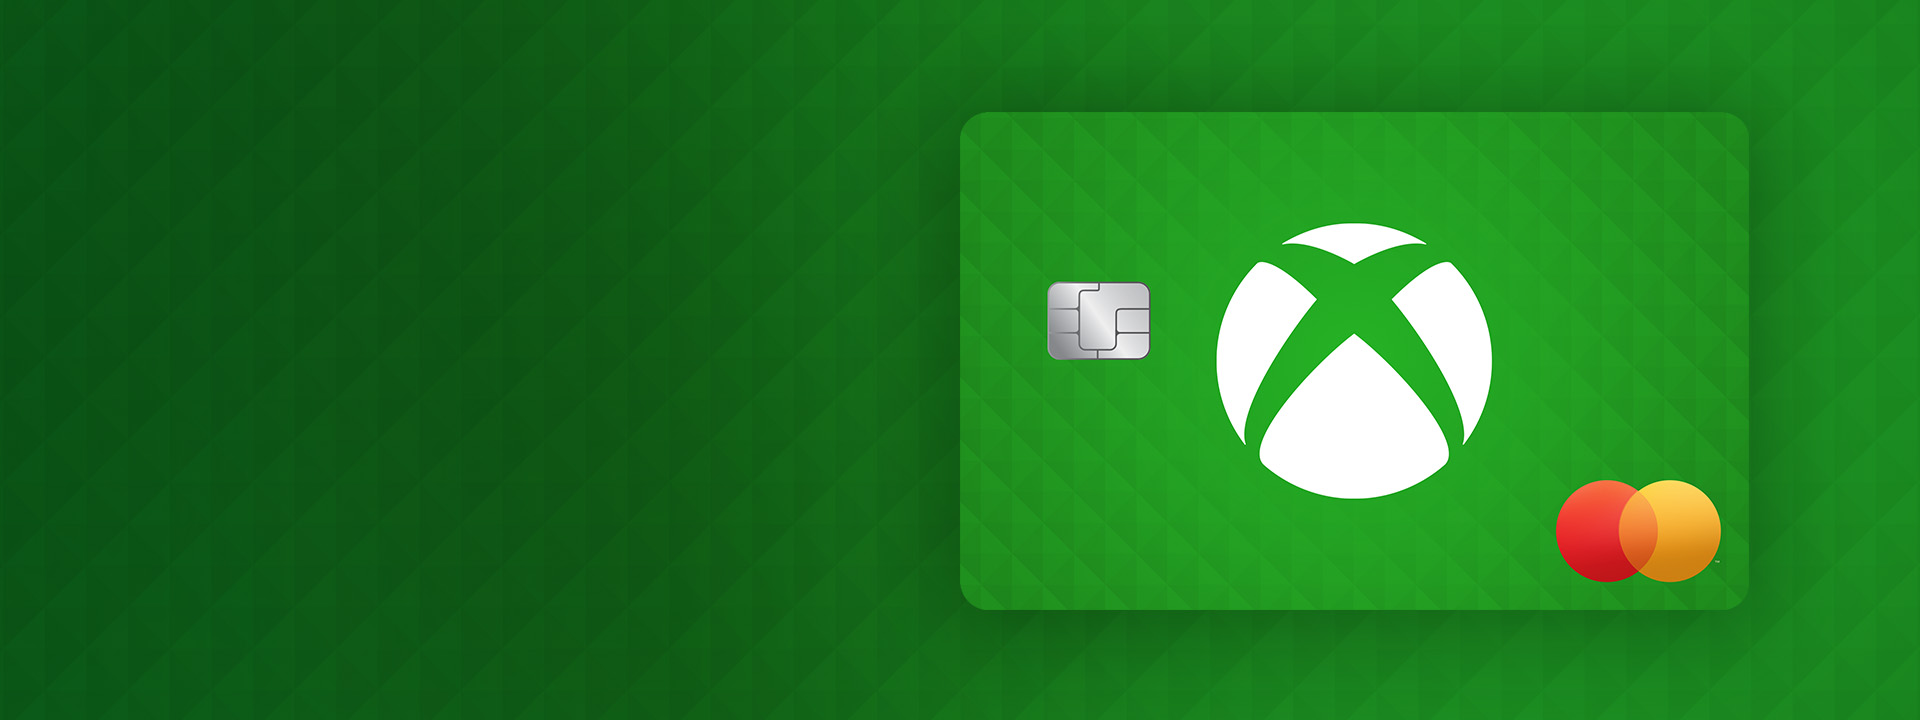 The green Xbox Mastercard